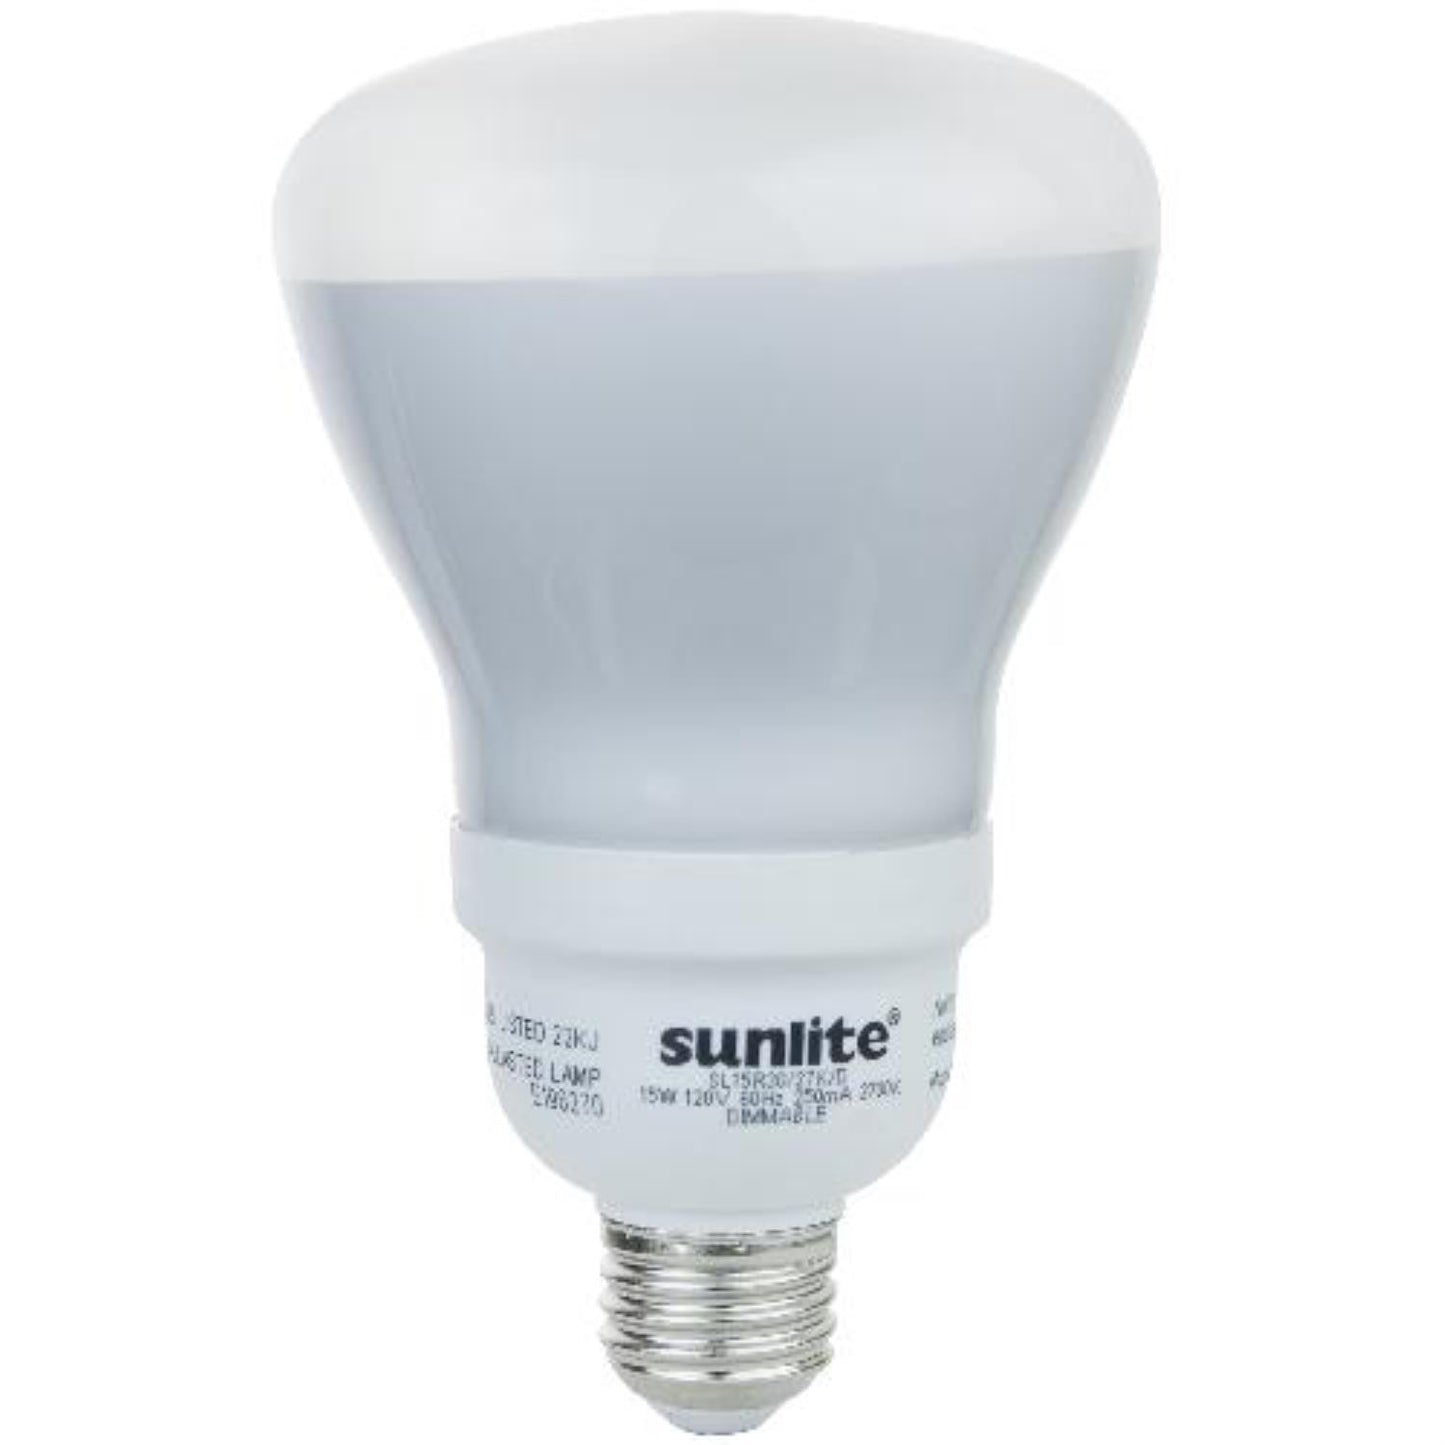 Sunlite 15 Watt R30 Reflector Warm White Medium Base CFL Light Bulb